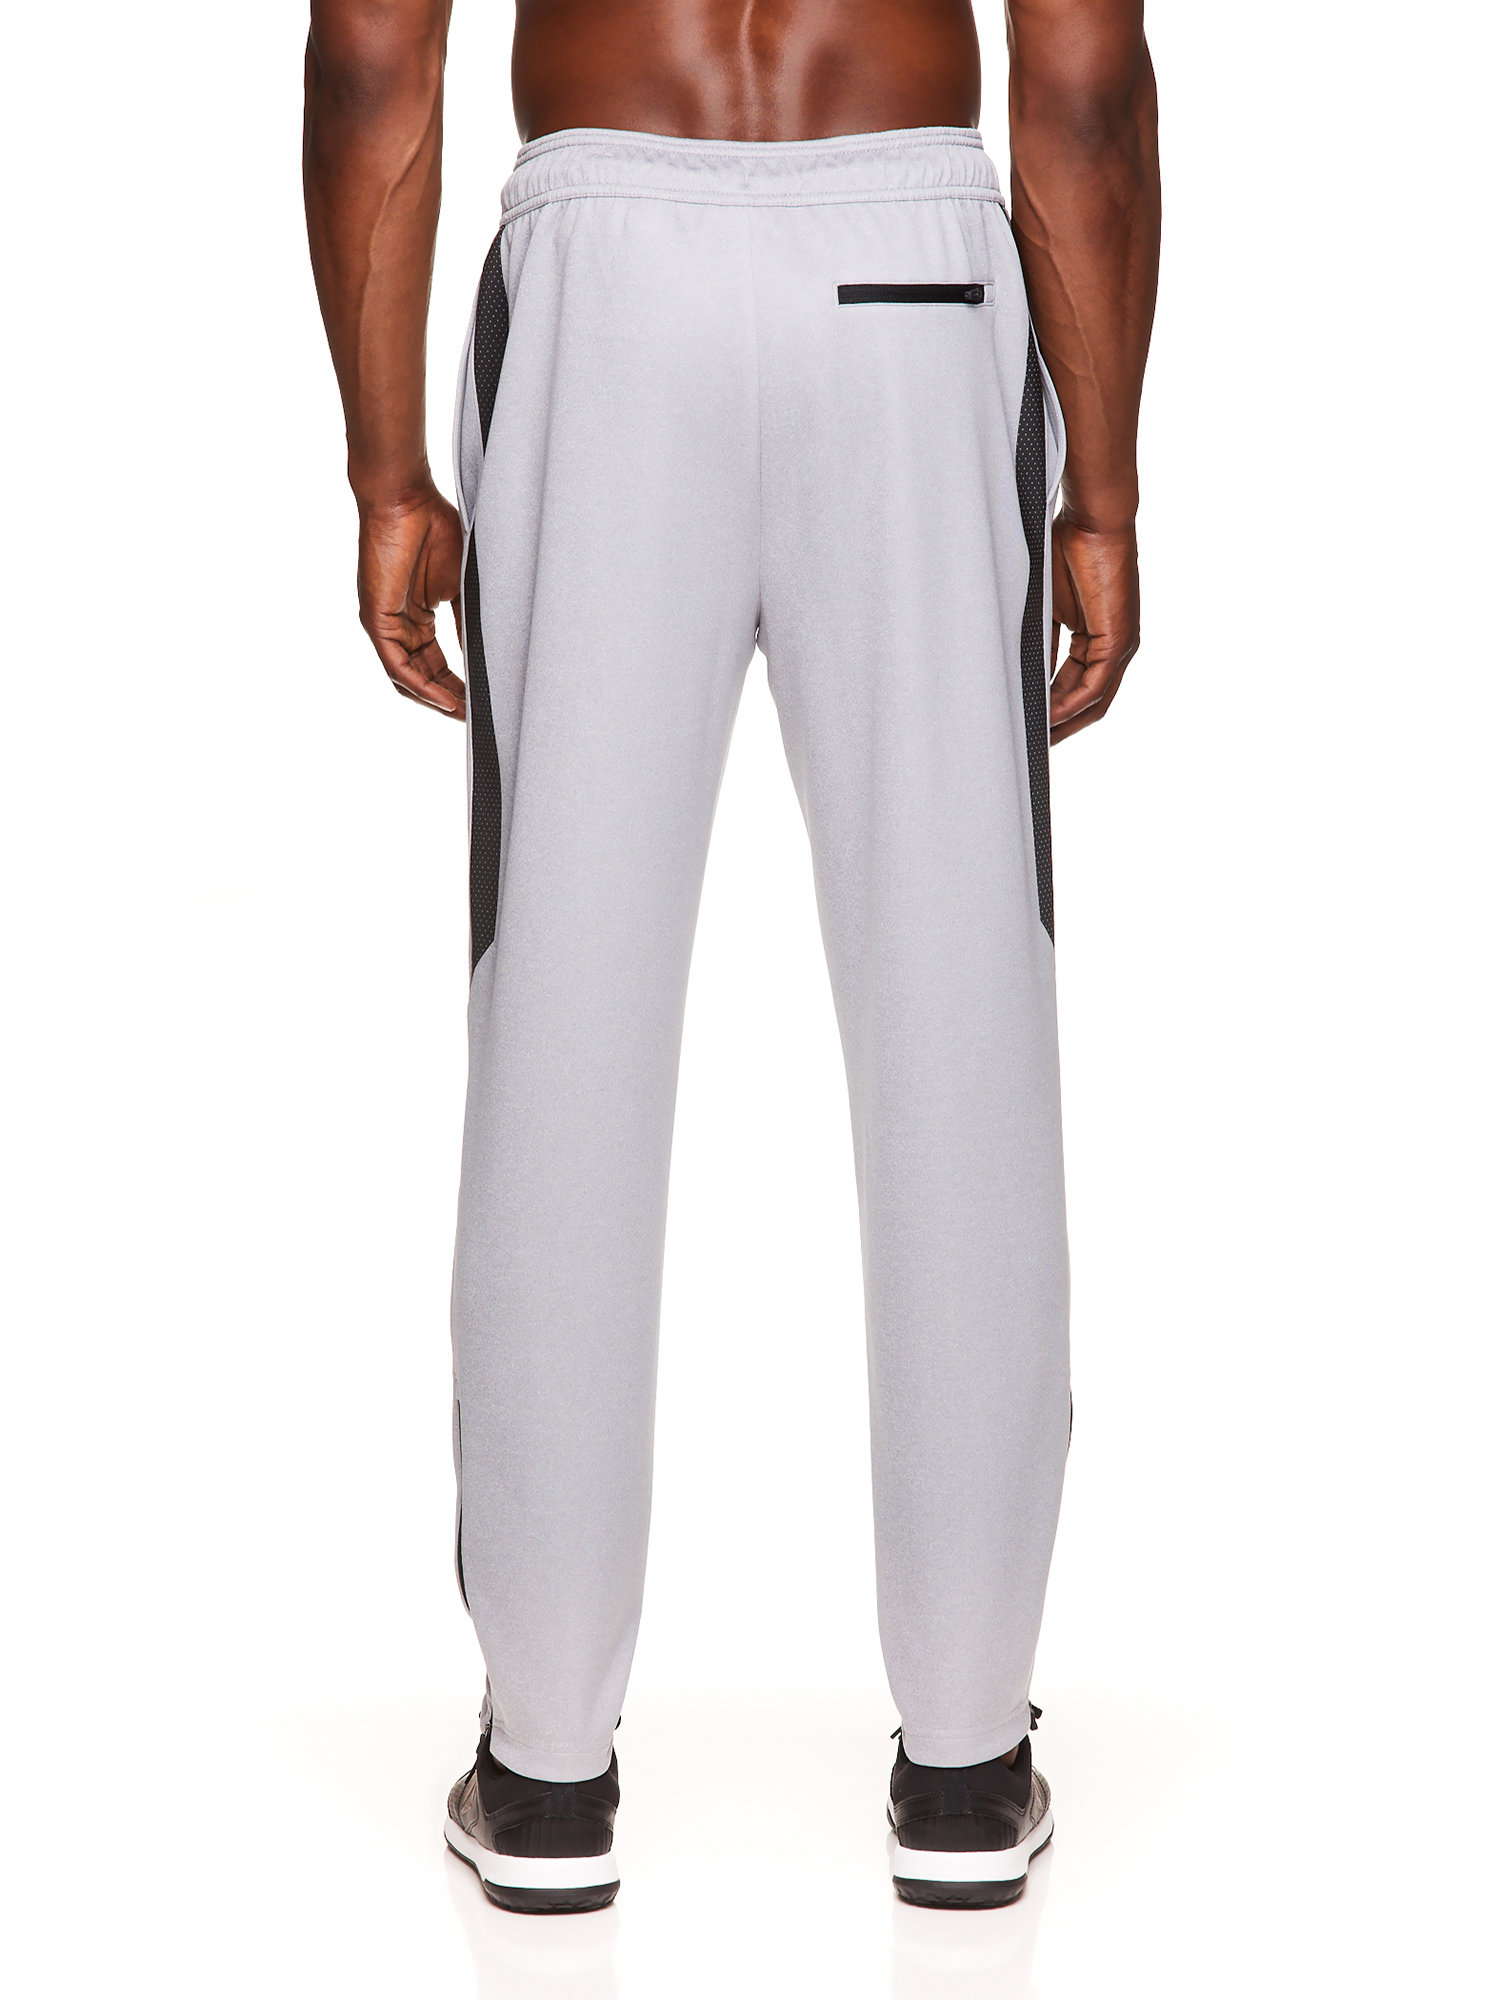 Reebok Men's and Big Men's Active Interlock Pants, up to Size 3XL - image 2 of 4